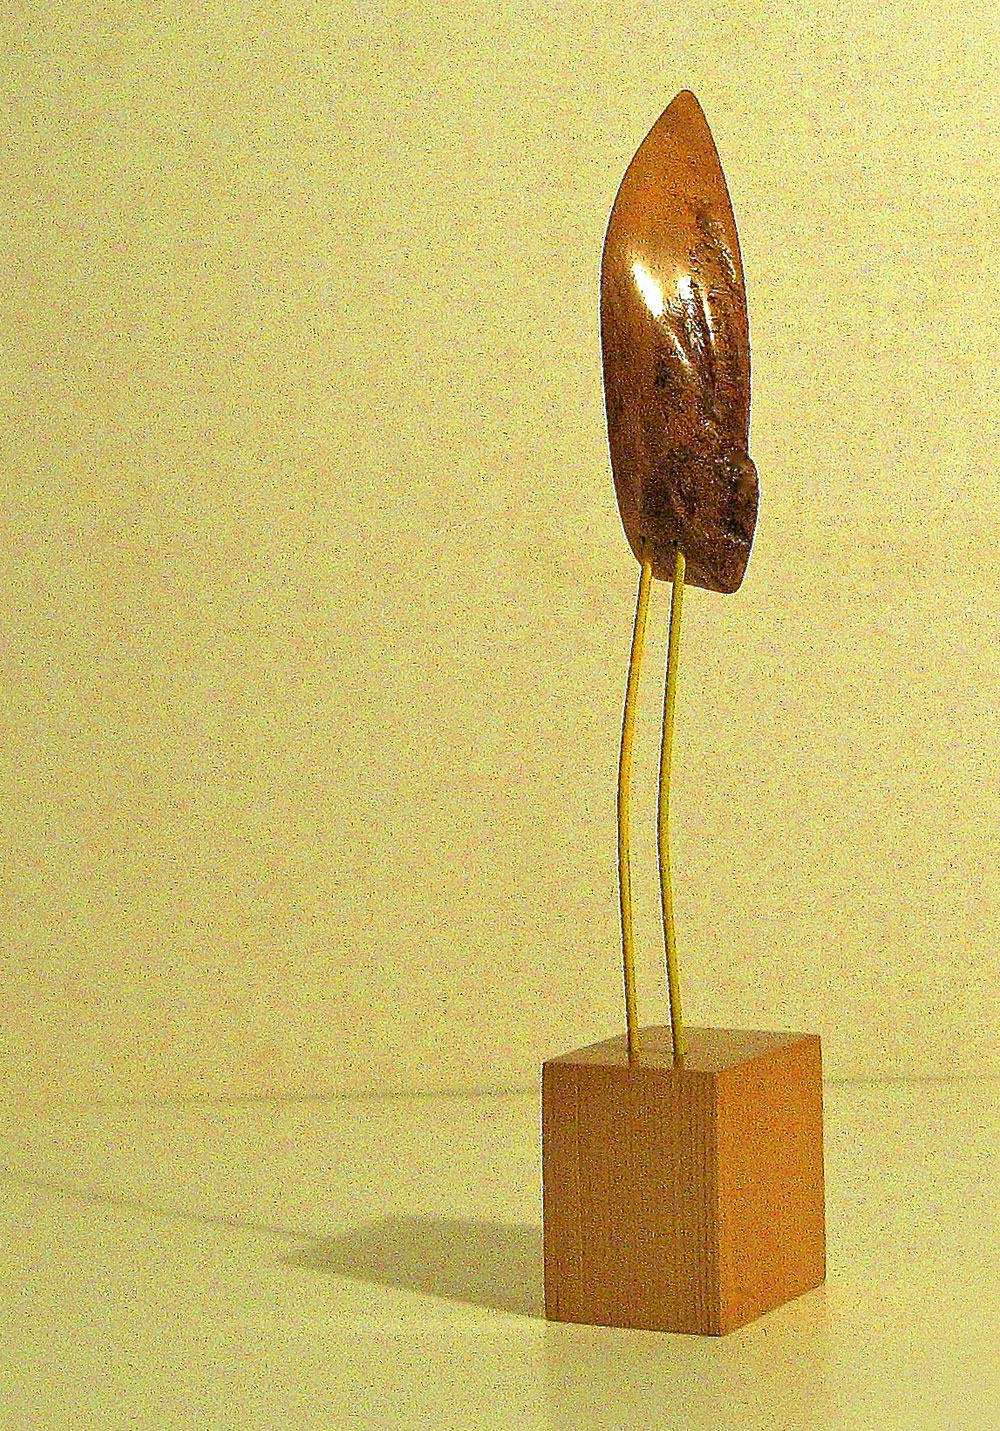 Knot Bird wood carving sculpture